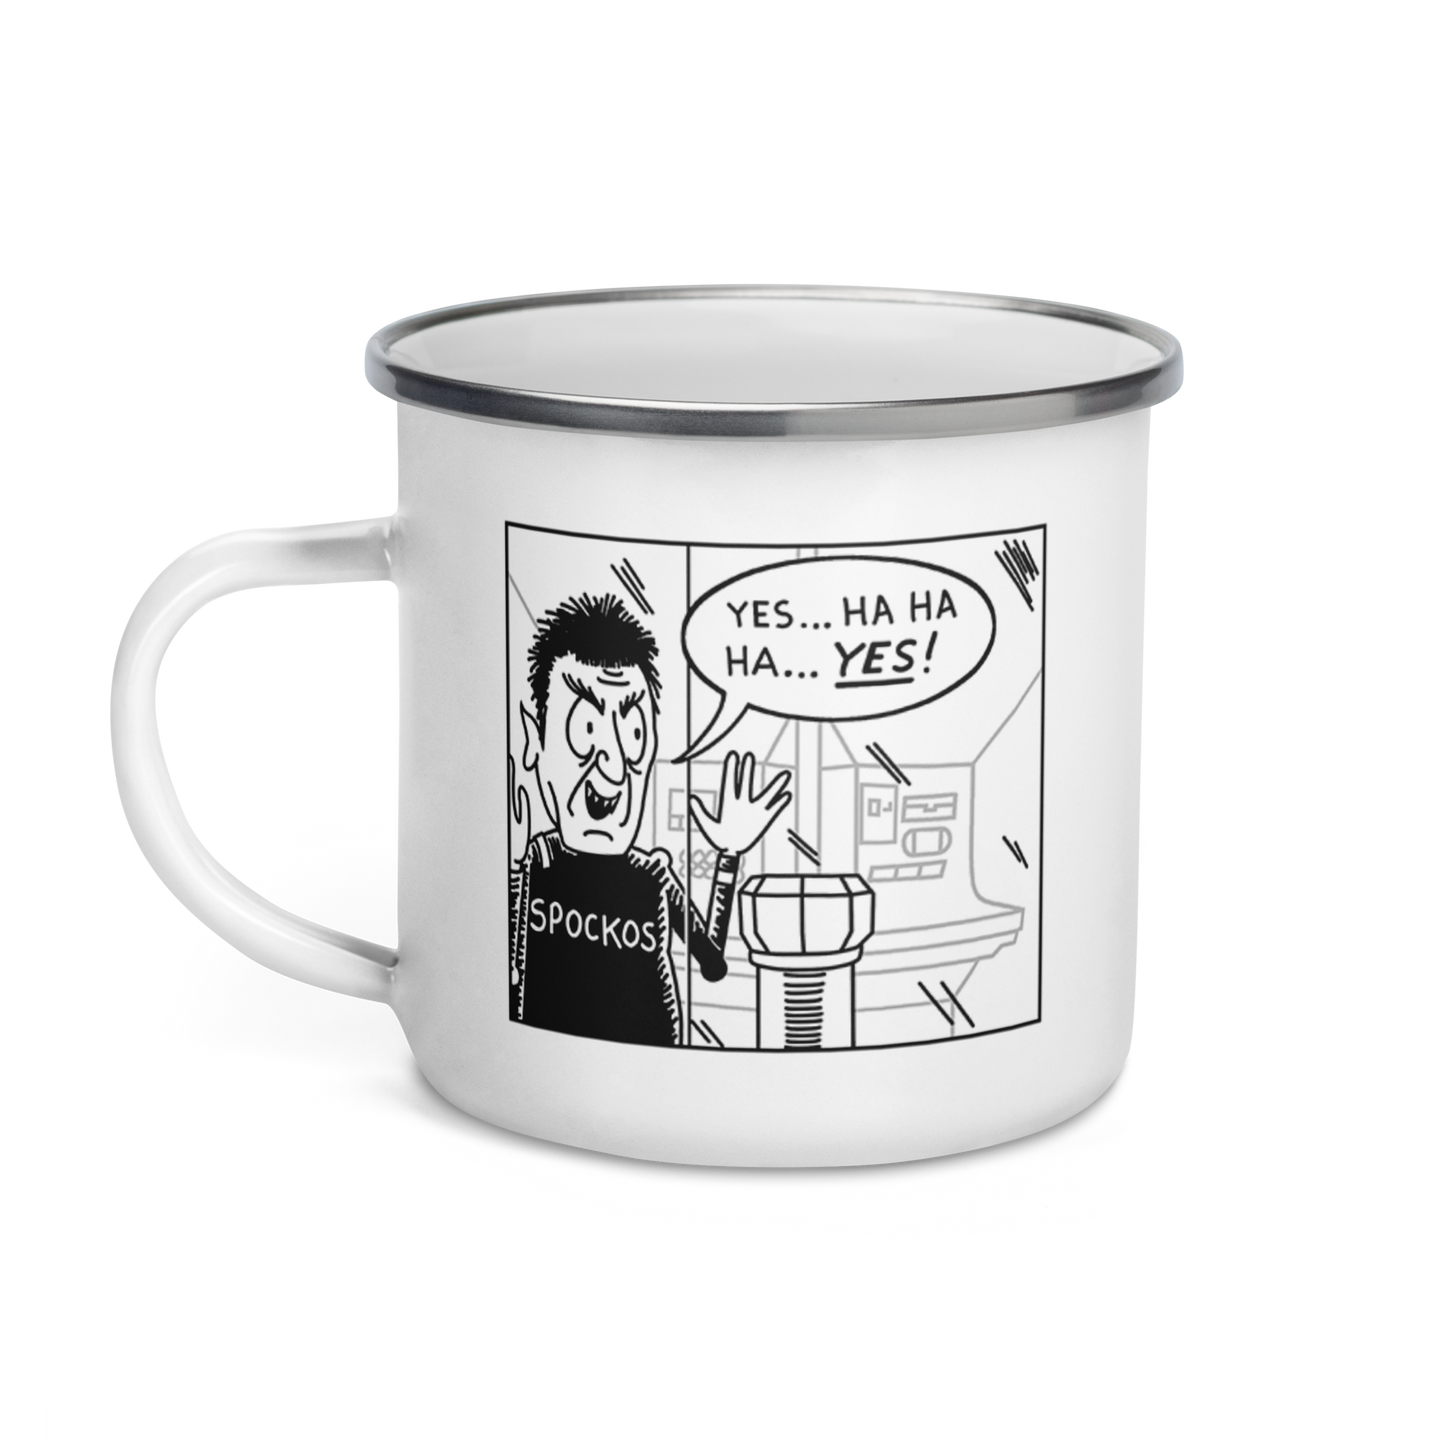 The Spockos Enamel Mug